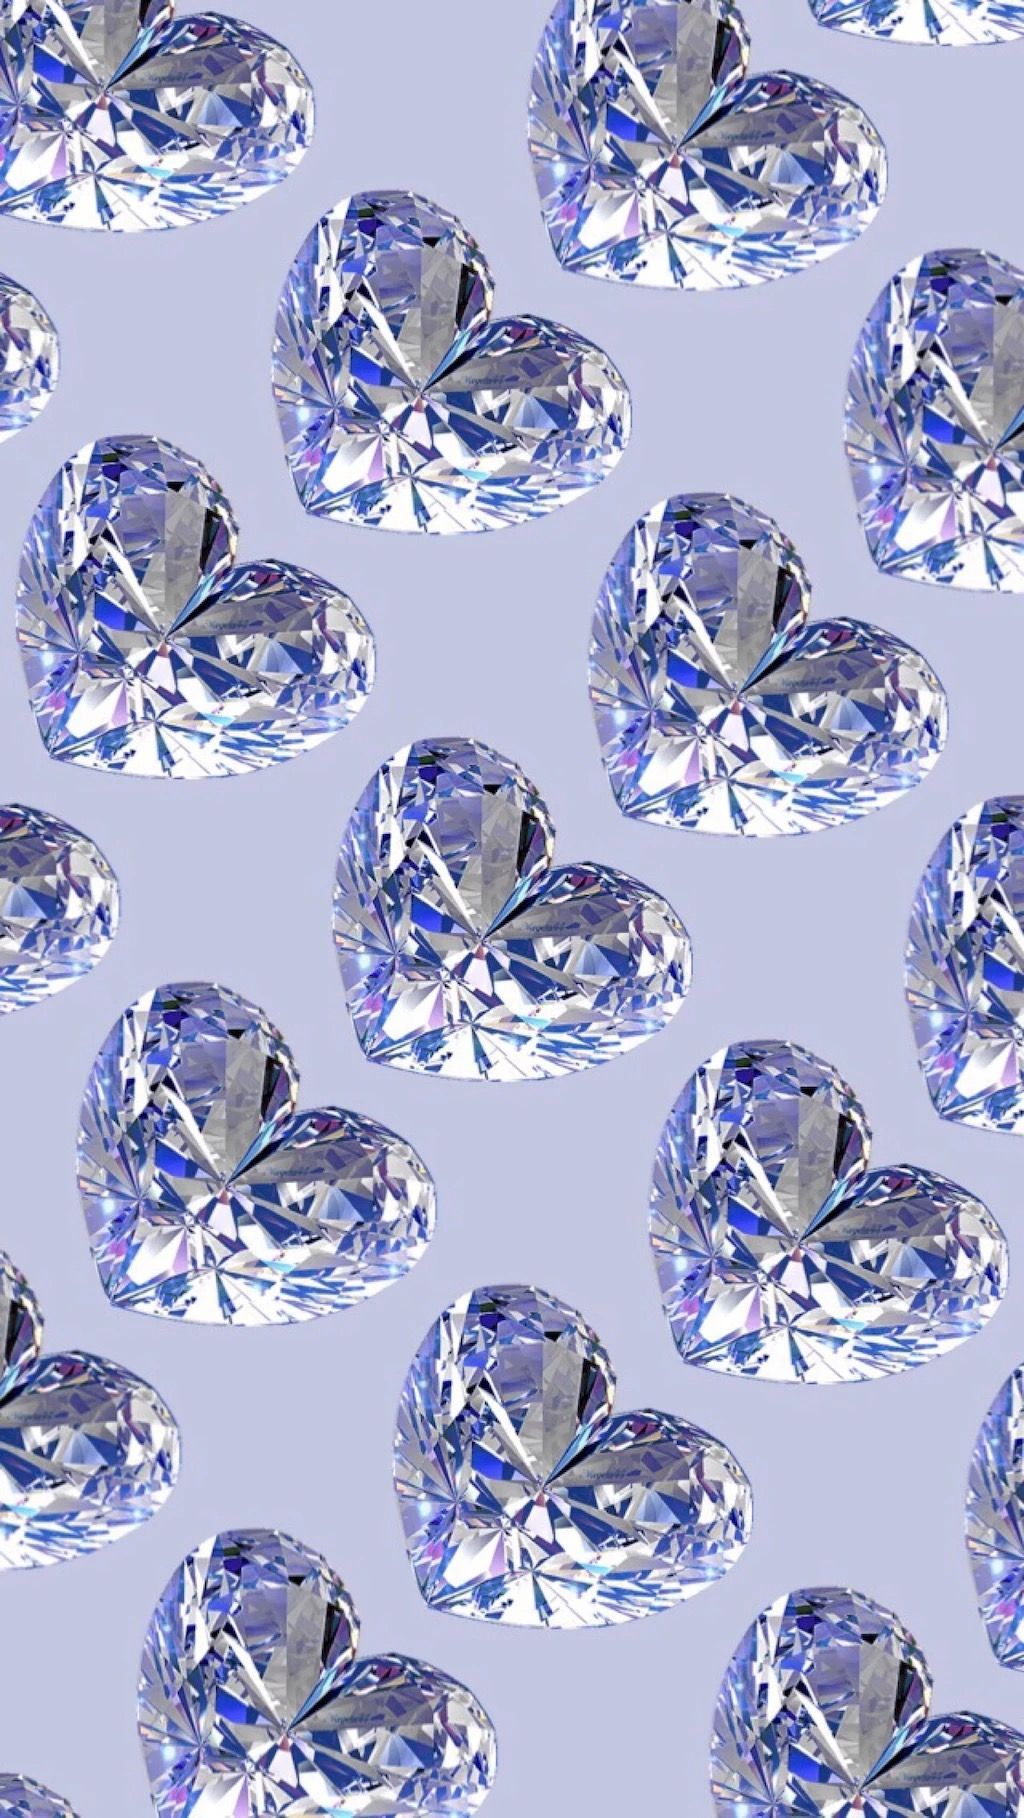 A pattern of diamonds on blue background - Diamond